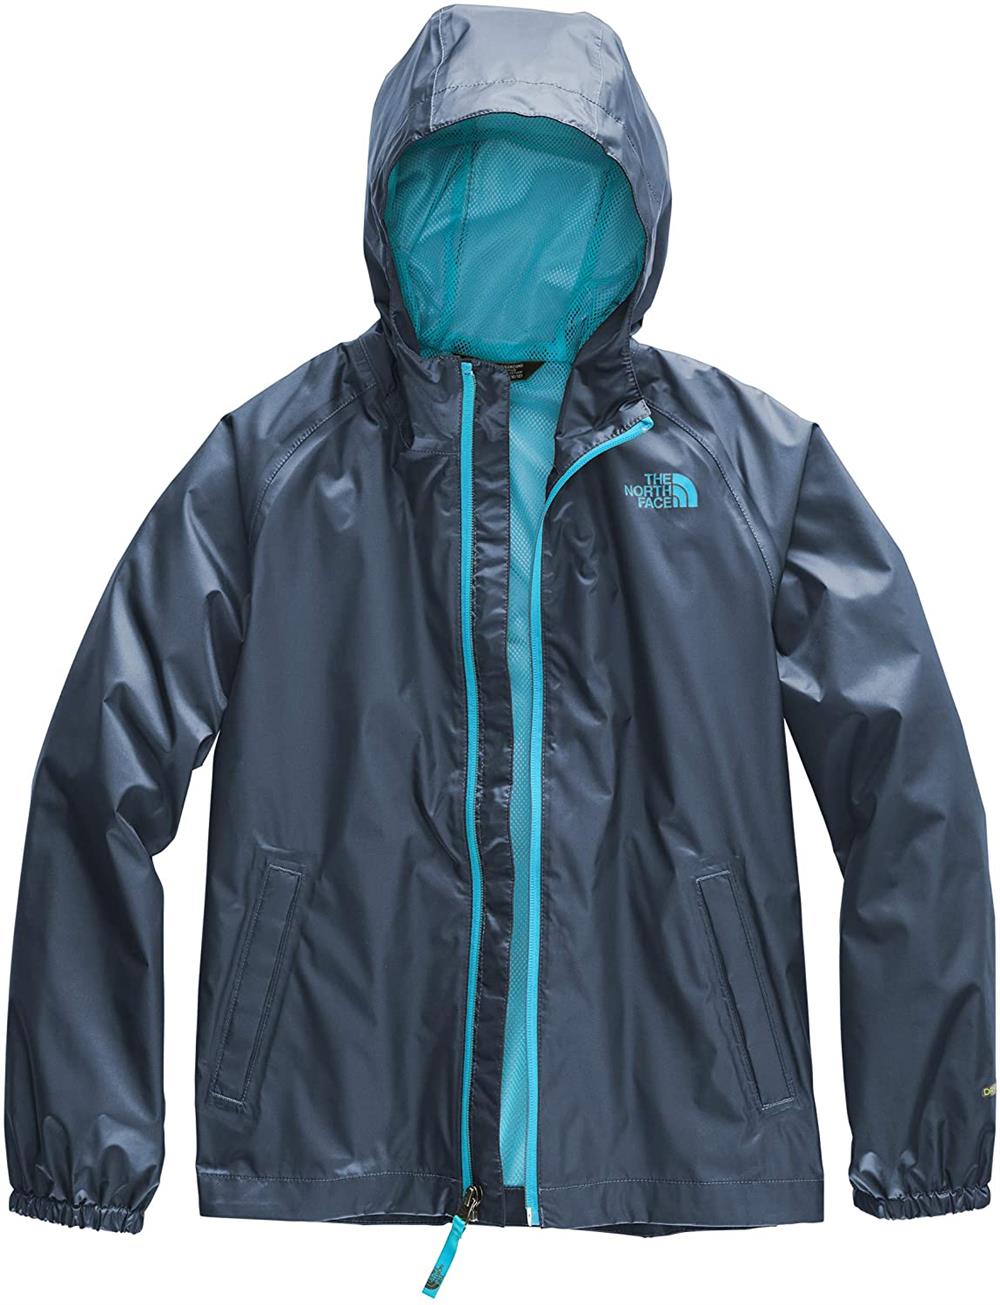 The North Face Zipline Rain jacket